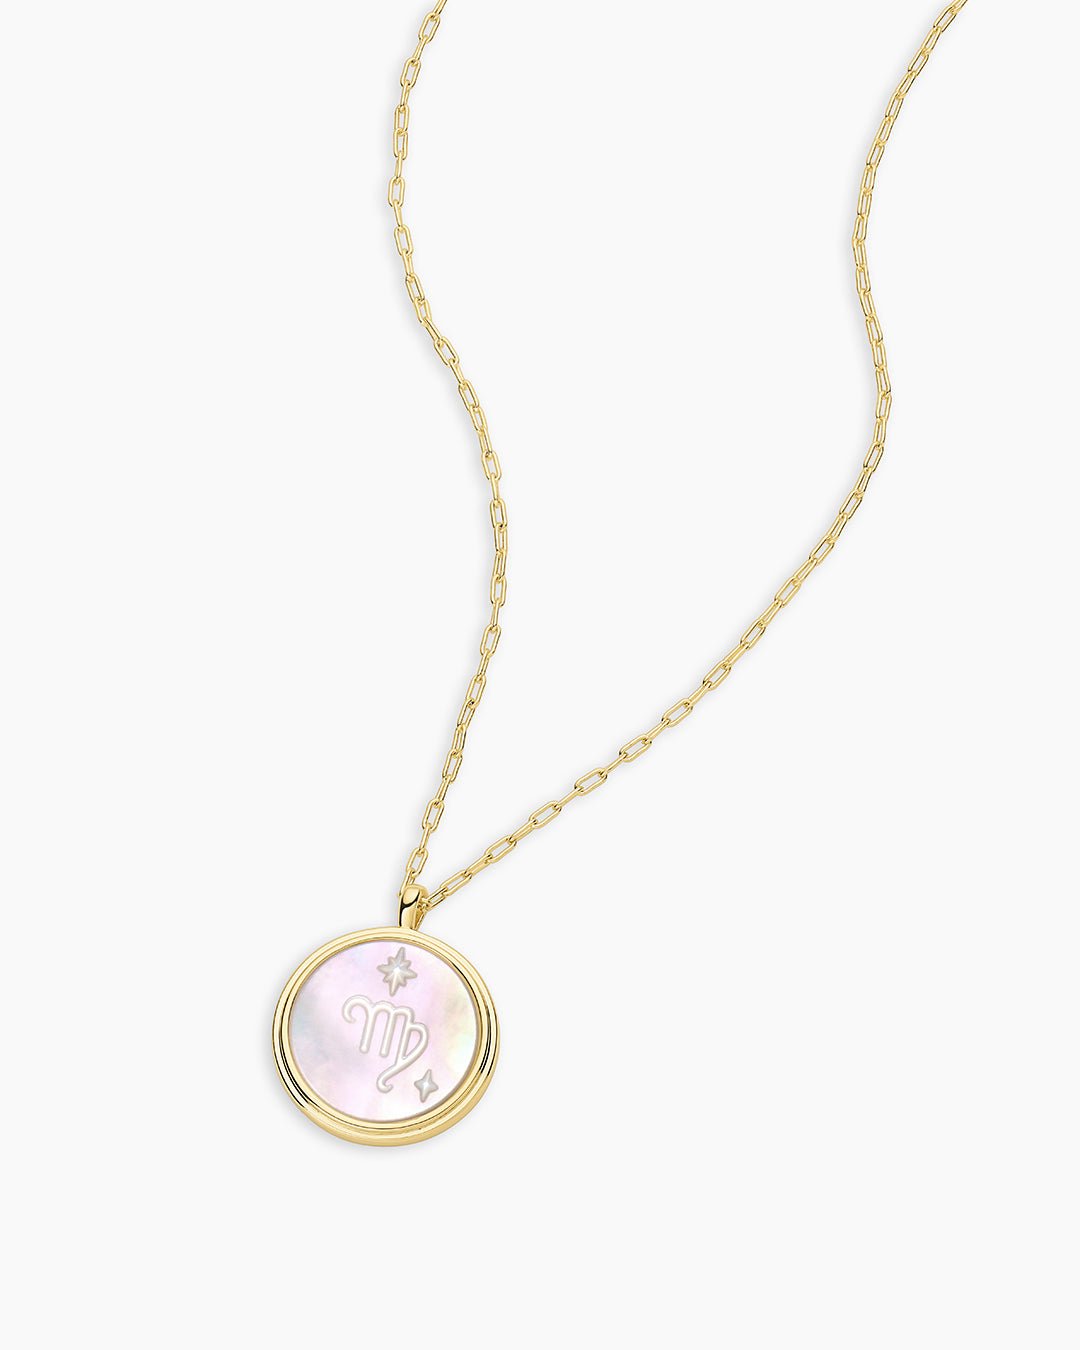 Zodiac Necklace - Scorpio, Astrology Coin Necklace, Scorpio Necklace || option::Gold Plated, Virgo